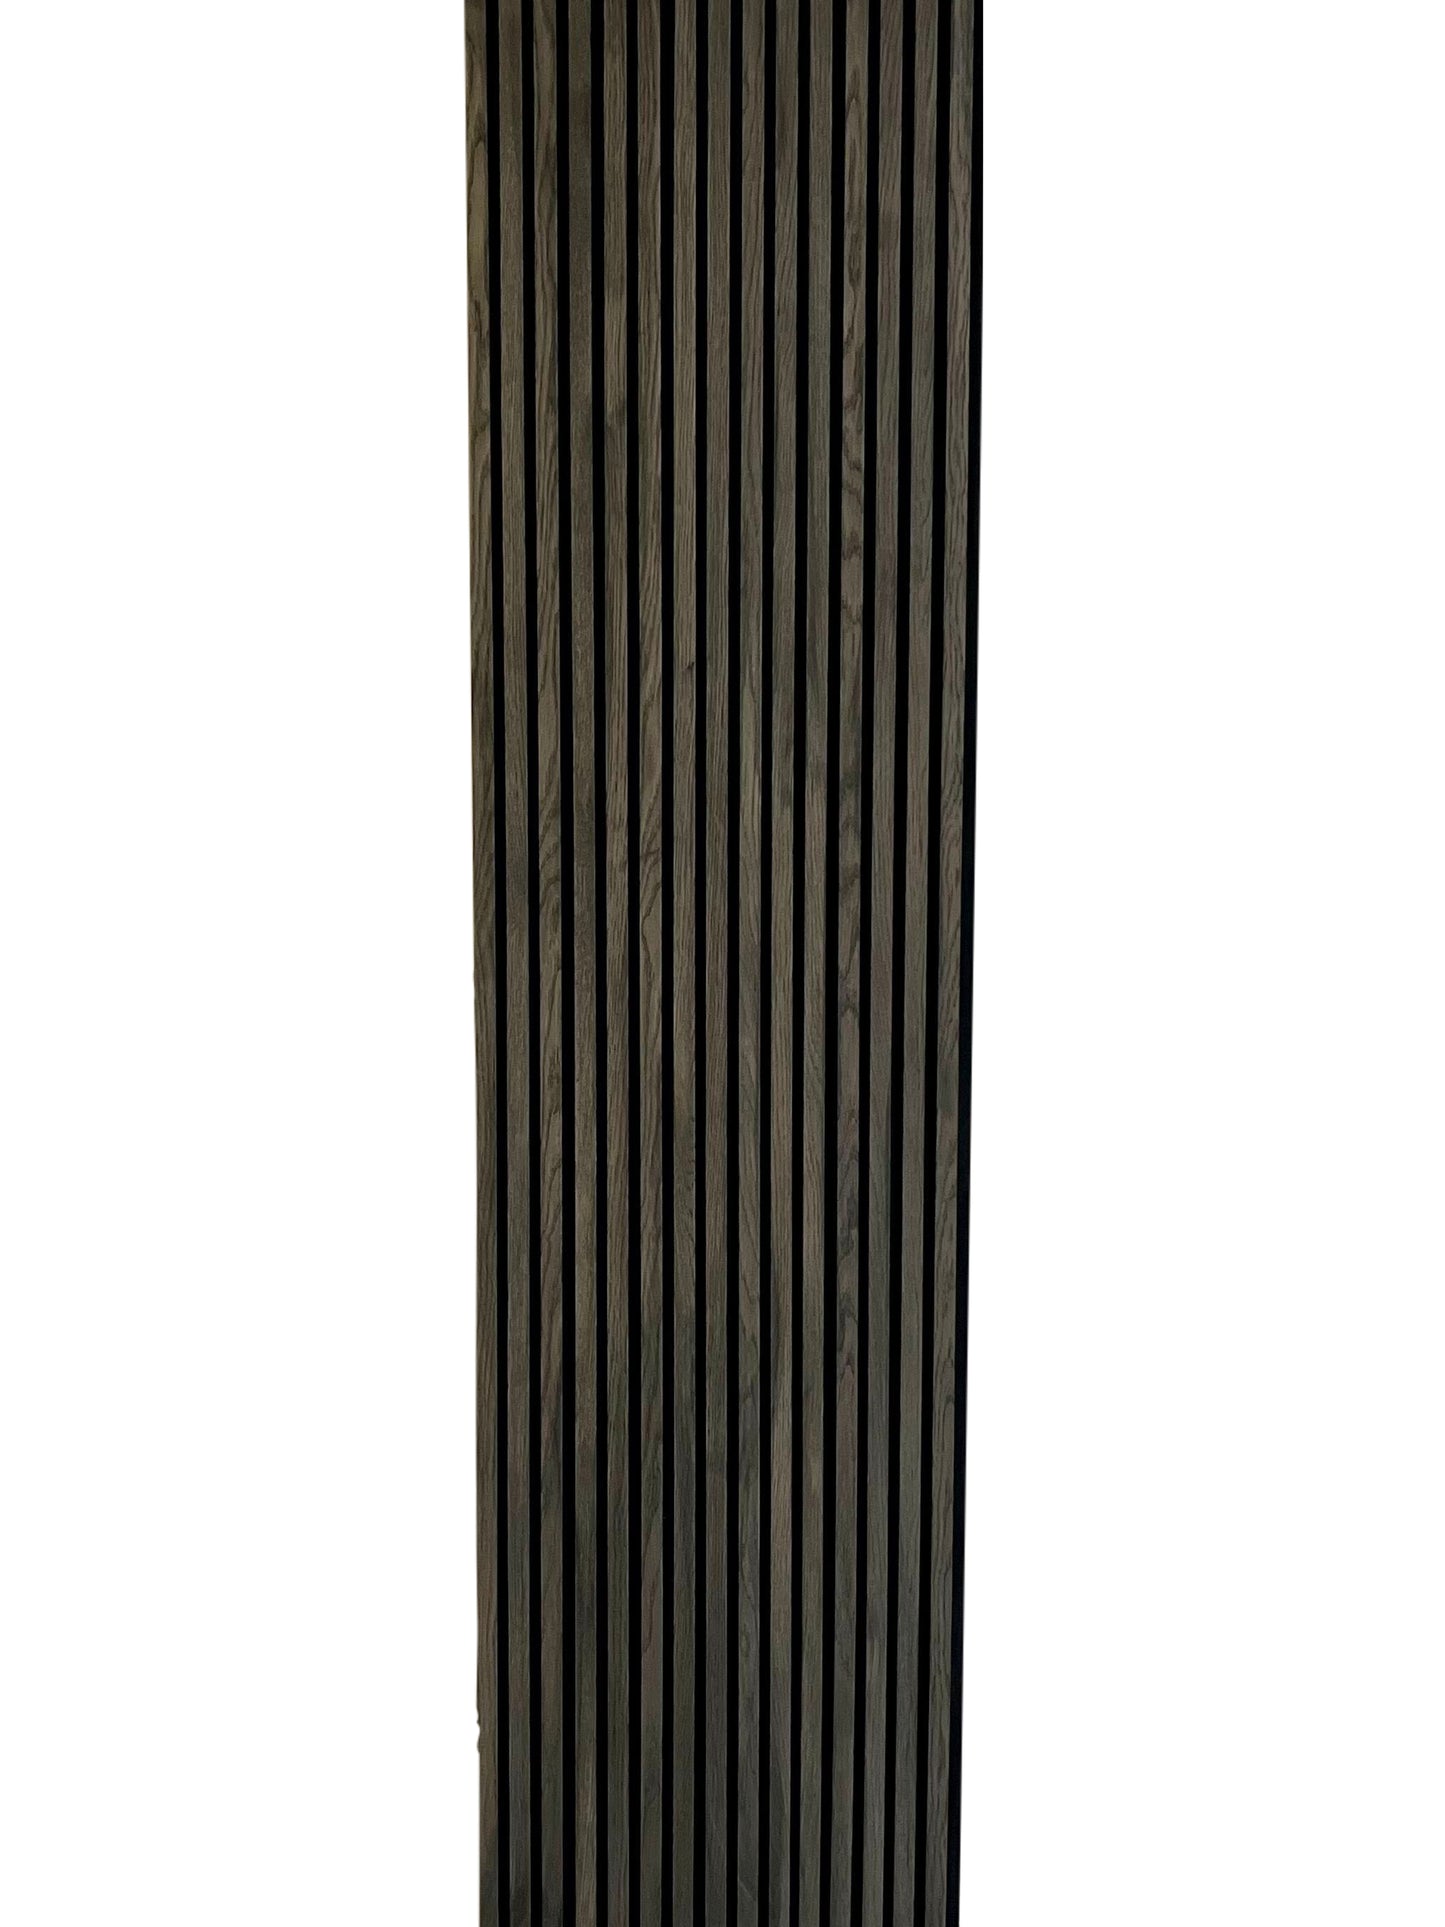 Eiken Wandpaneel Houtskool zwart - 240/260/280/300 x 60 cm